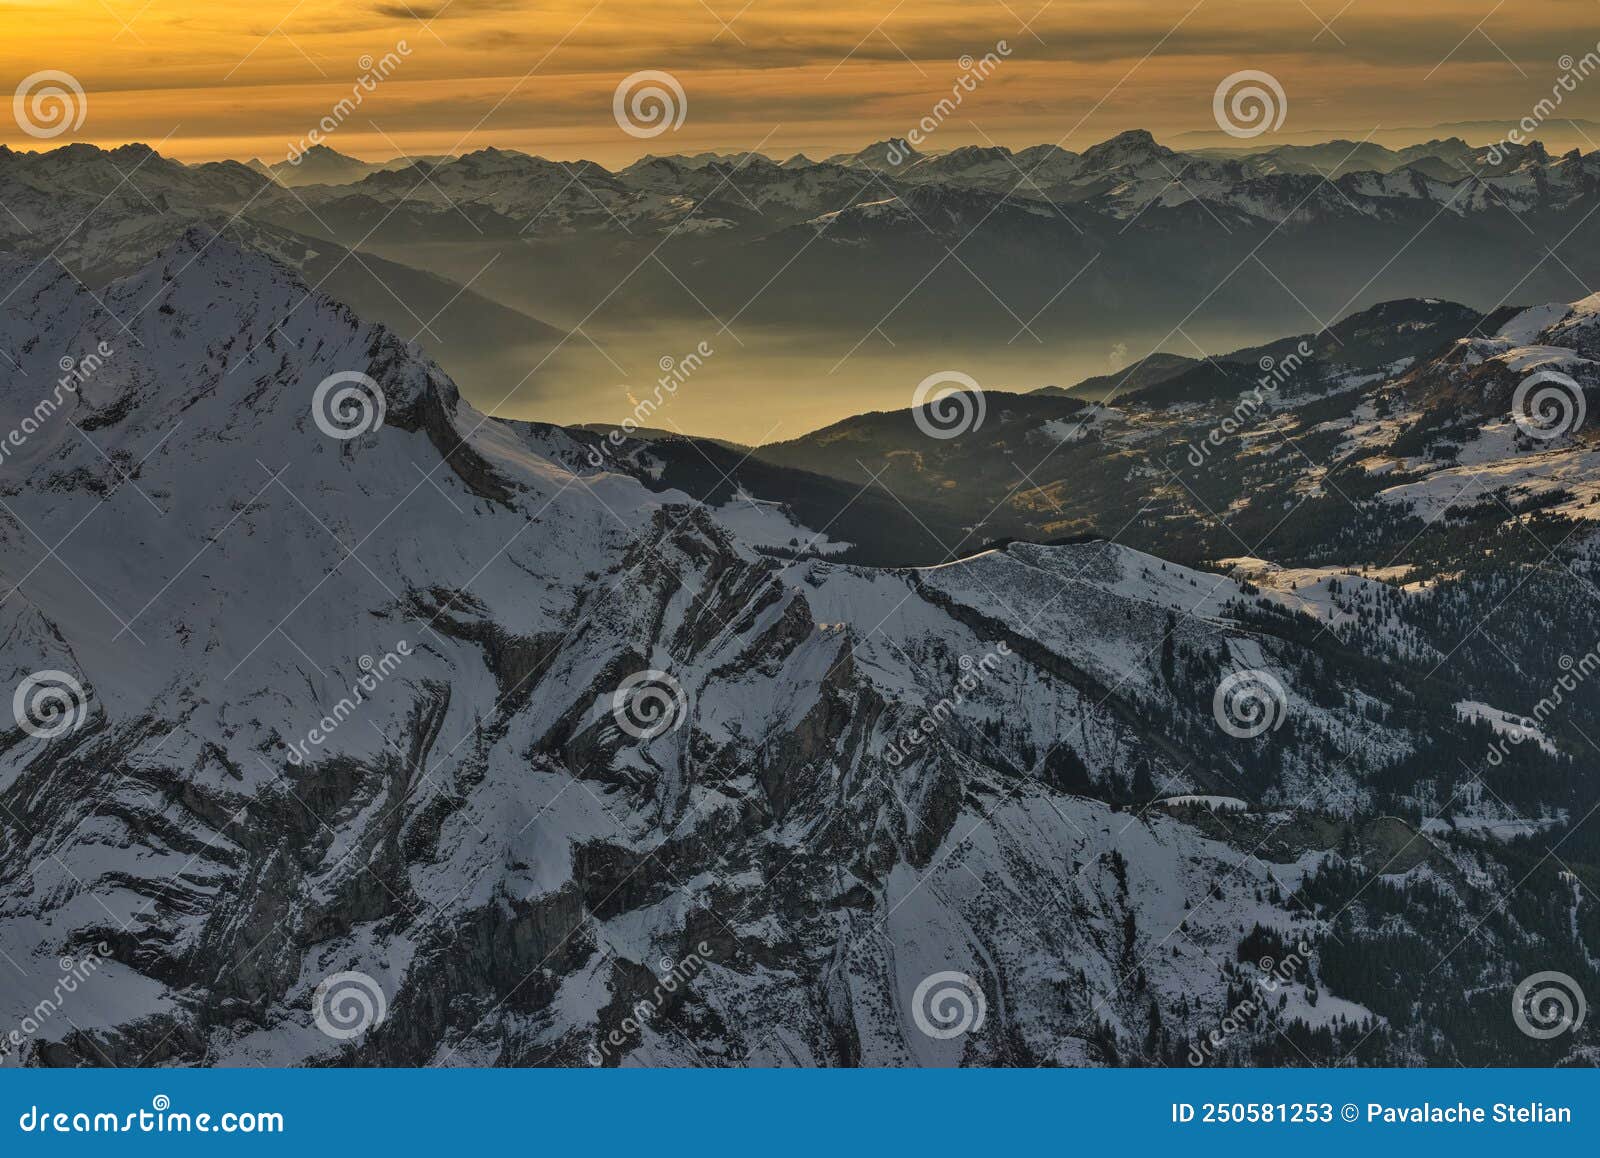 switzerland canton of vaud col de pillon glacier 3000, diableret